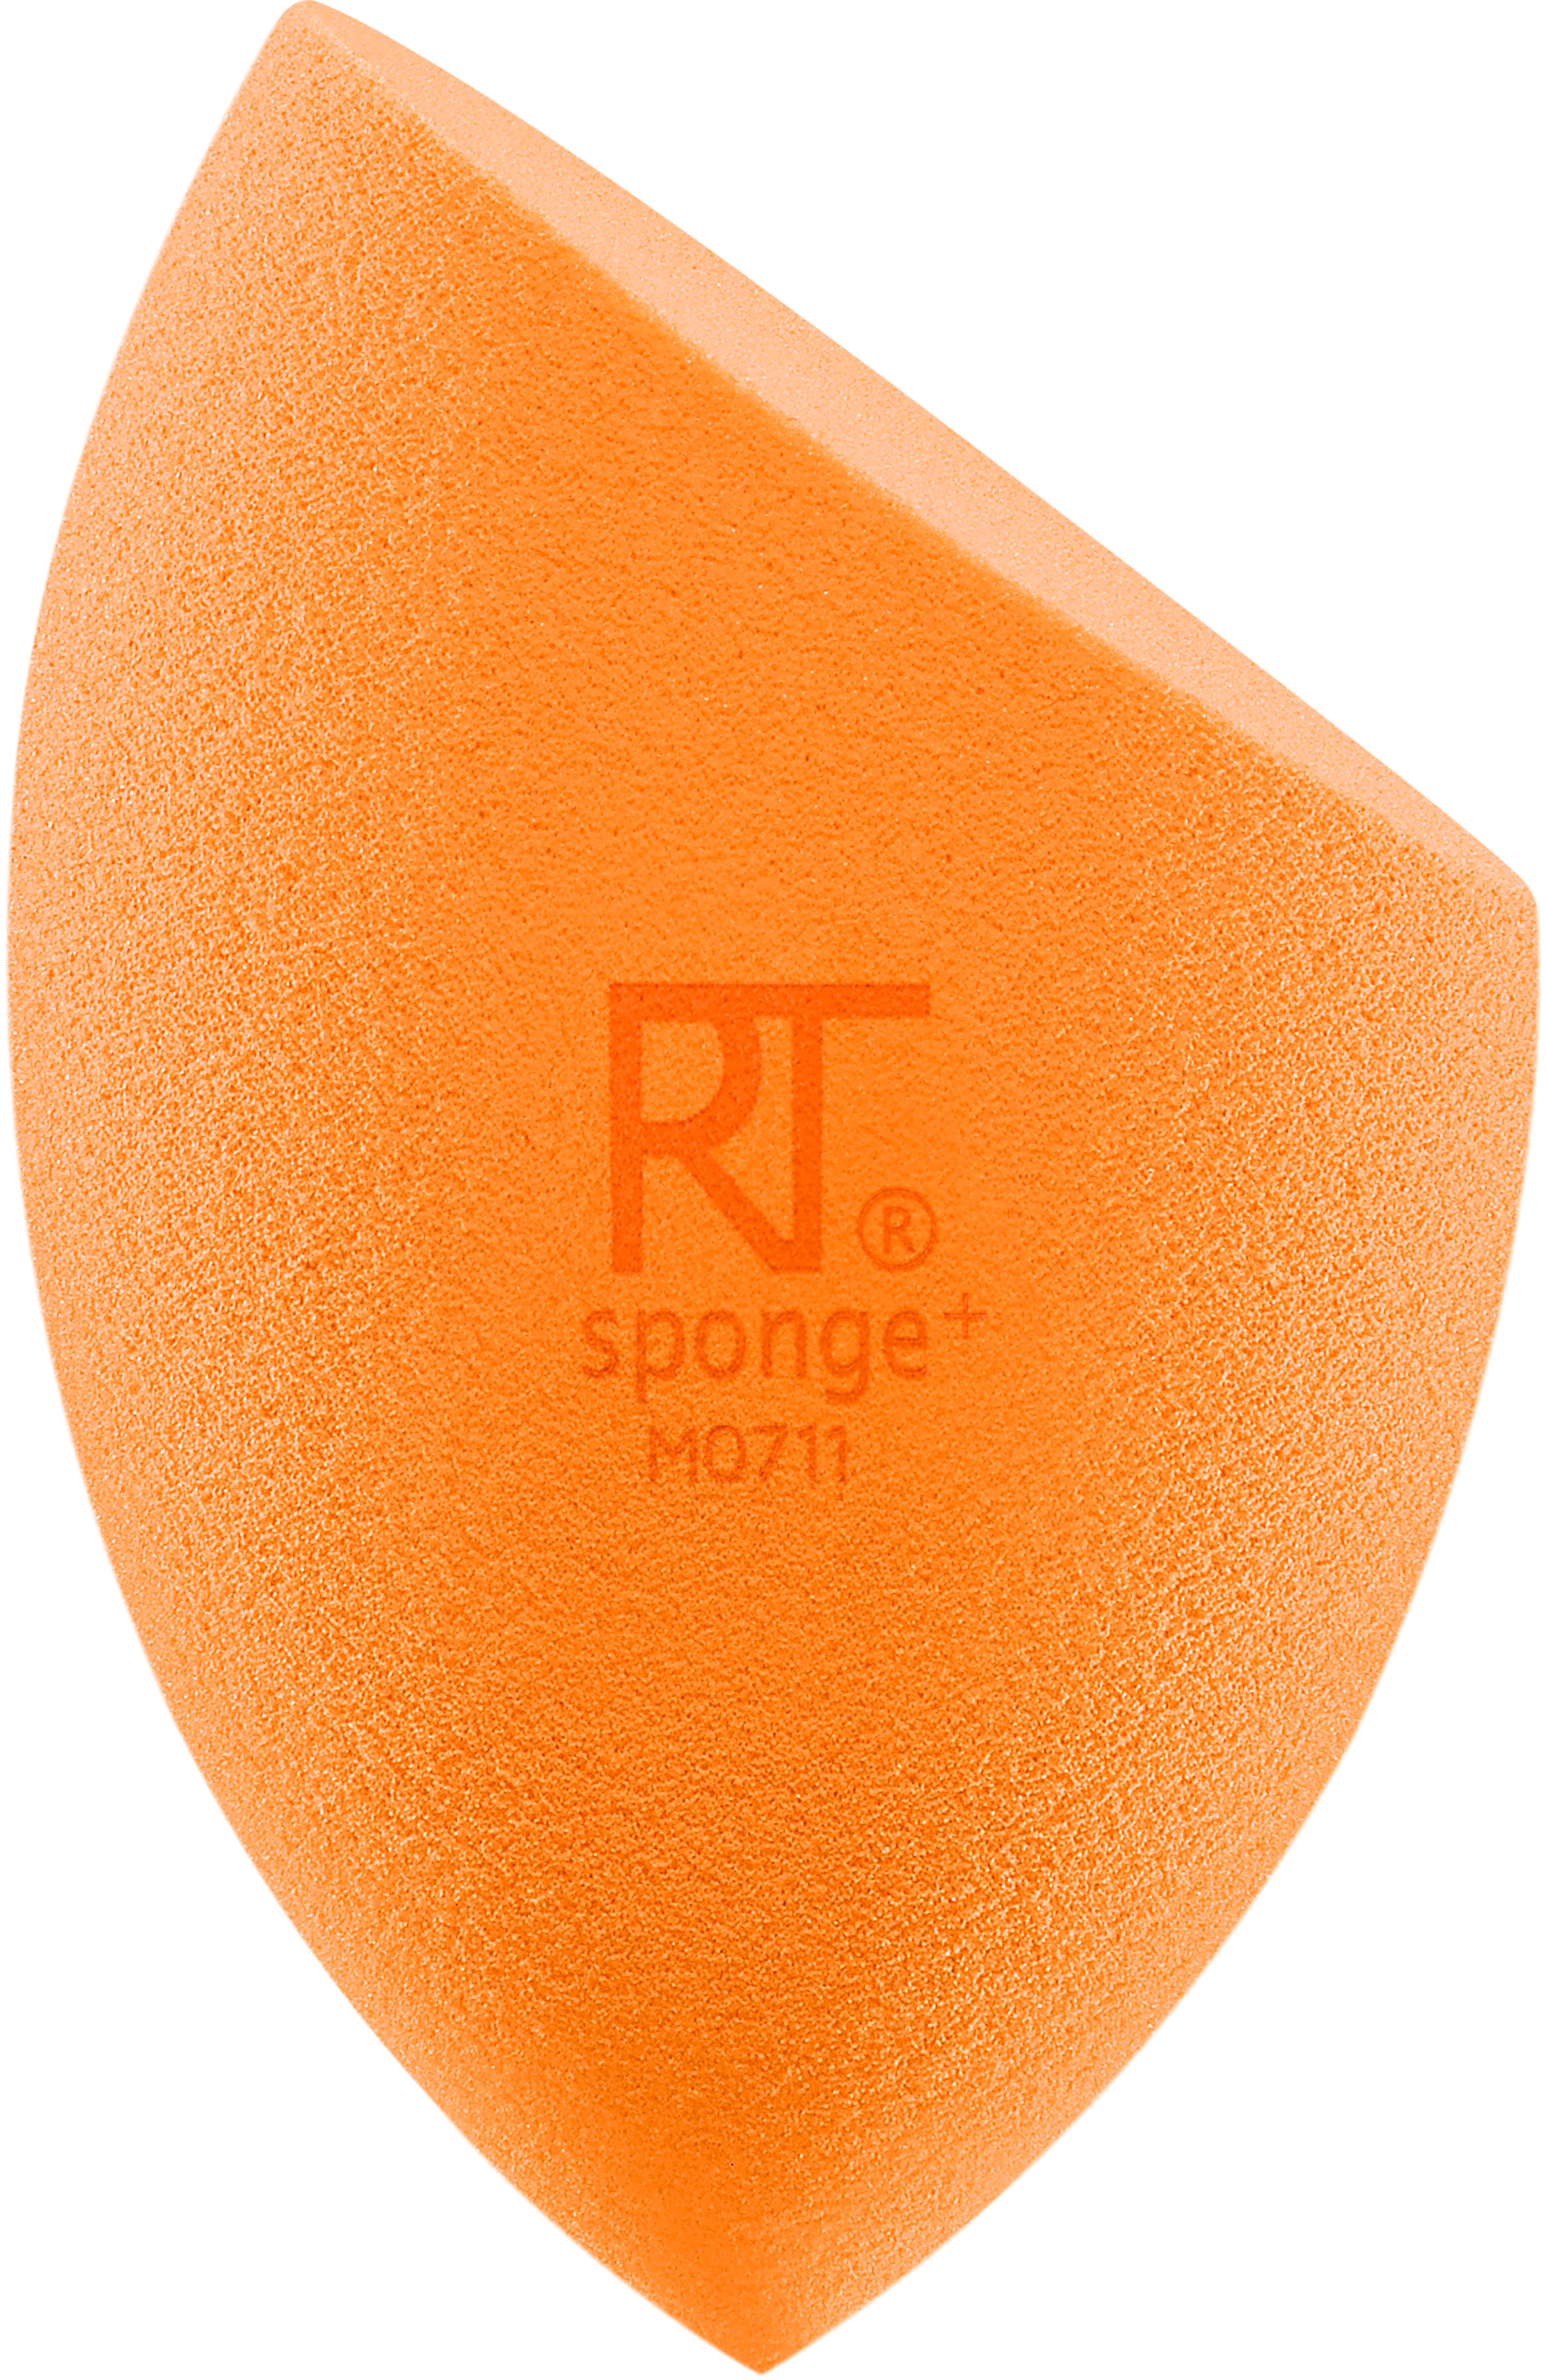 REAL TECHNIQUES Miracle Complexion Sponge 1 st